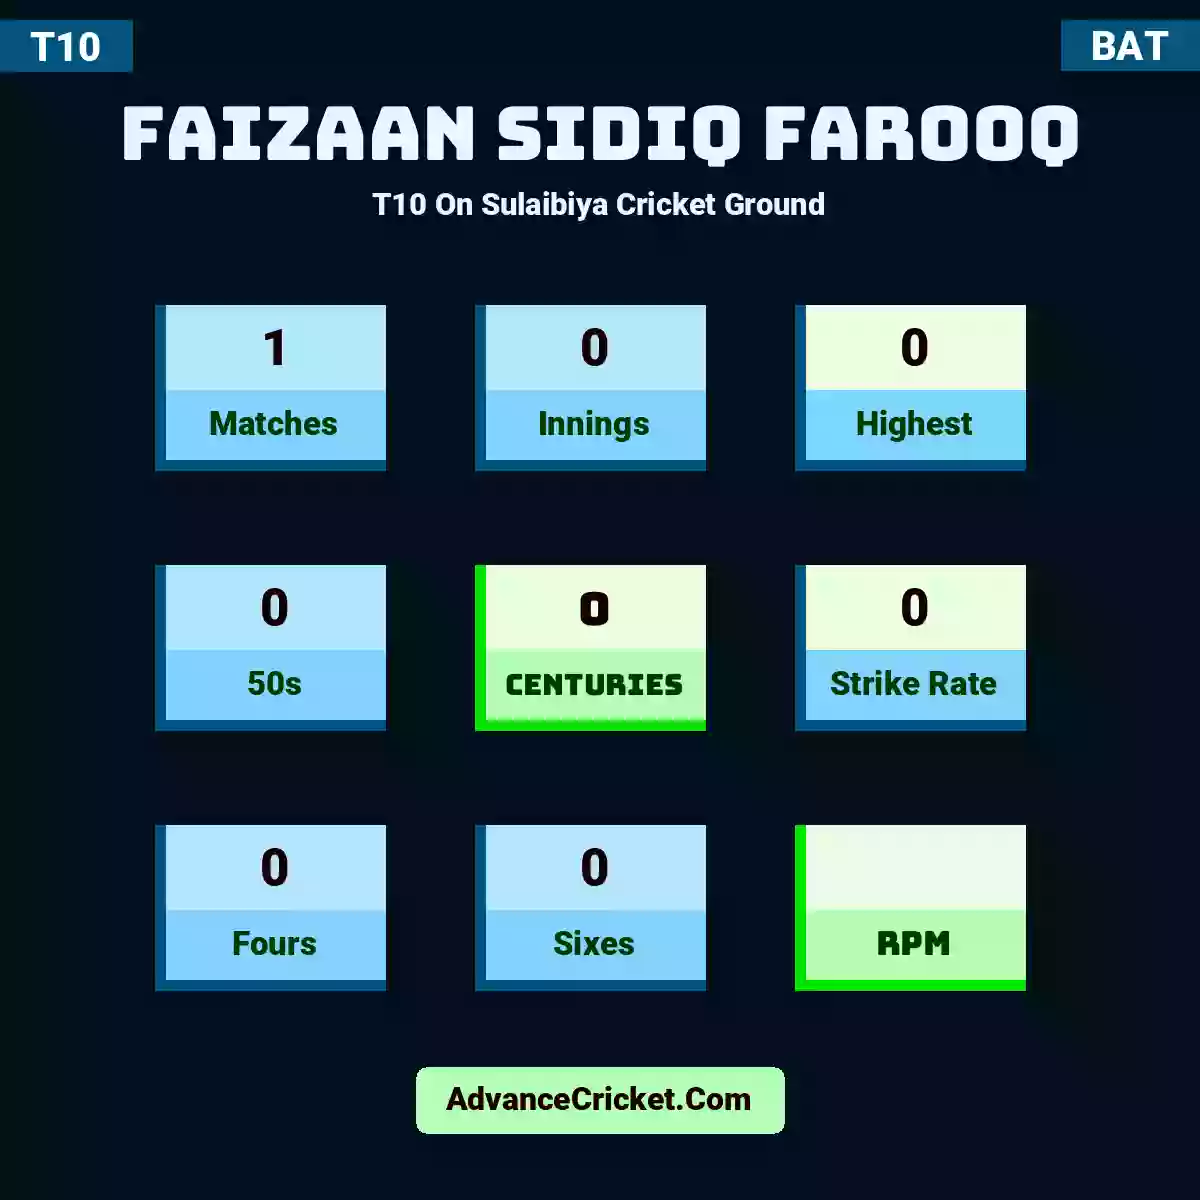 Faizaan Sidiq Farooq T10  On Sulaibiya Cricket Ground, Faizaan Sidiq Farooq played 1 matches, scored 0 runs as highest, 0 half-centuries, and 0 centuries, with a strike rate of 0. F.Sidiq.Farooq hit 0 fours and 0 sixes.